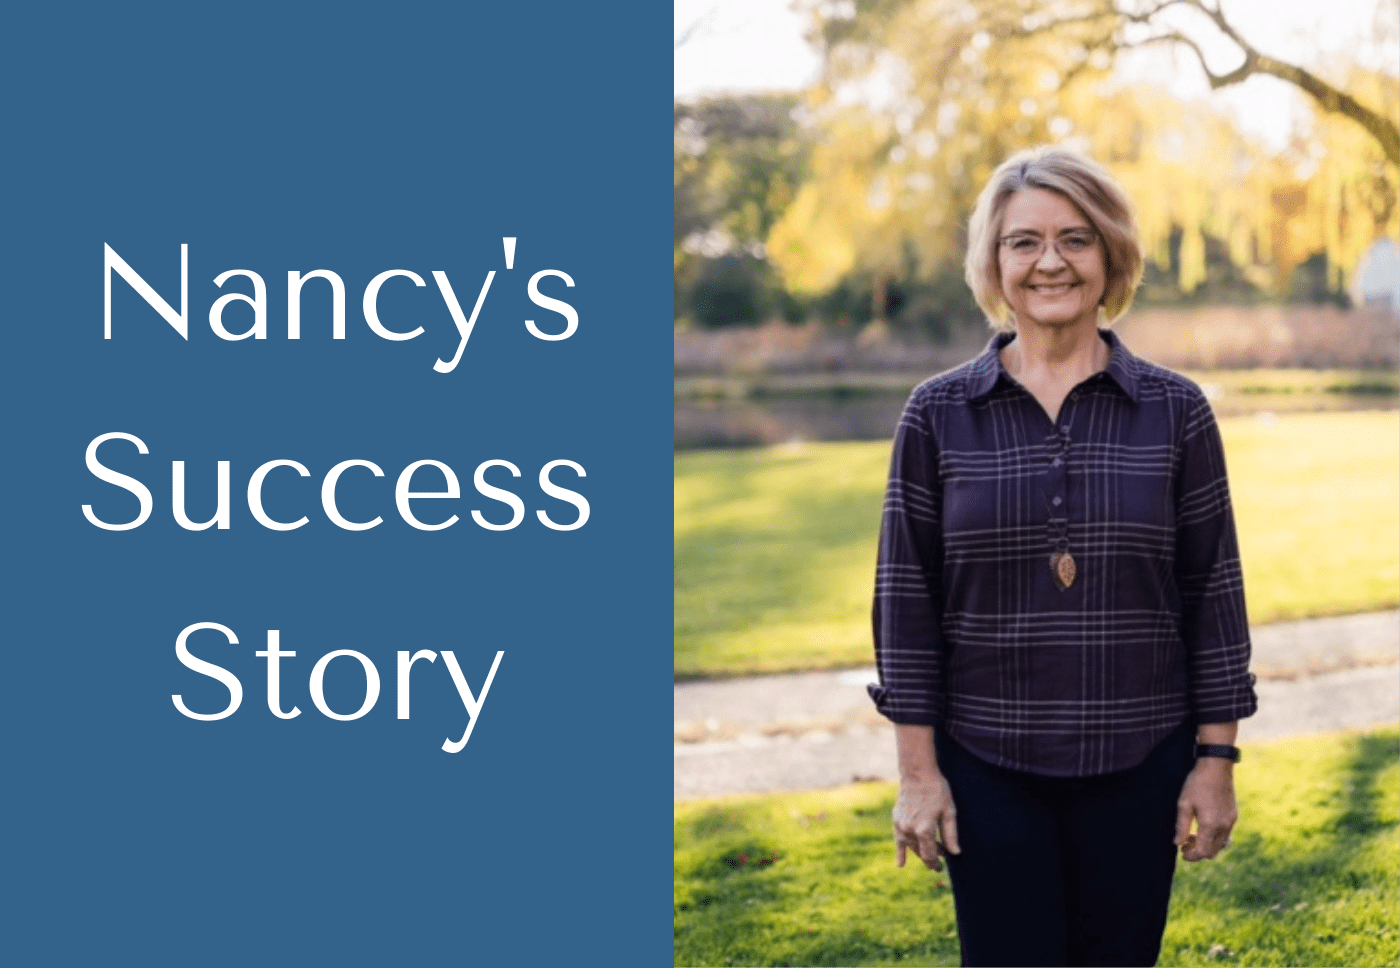 Nancy's Story